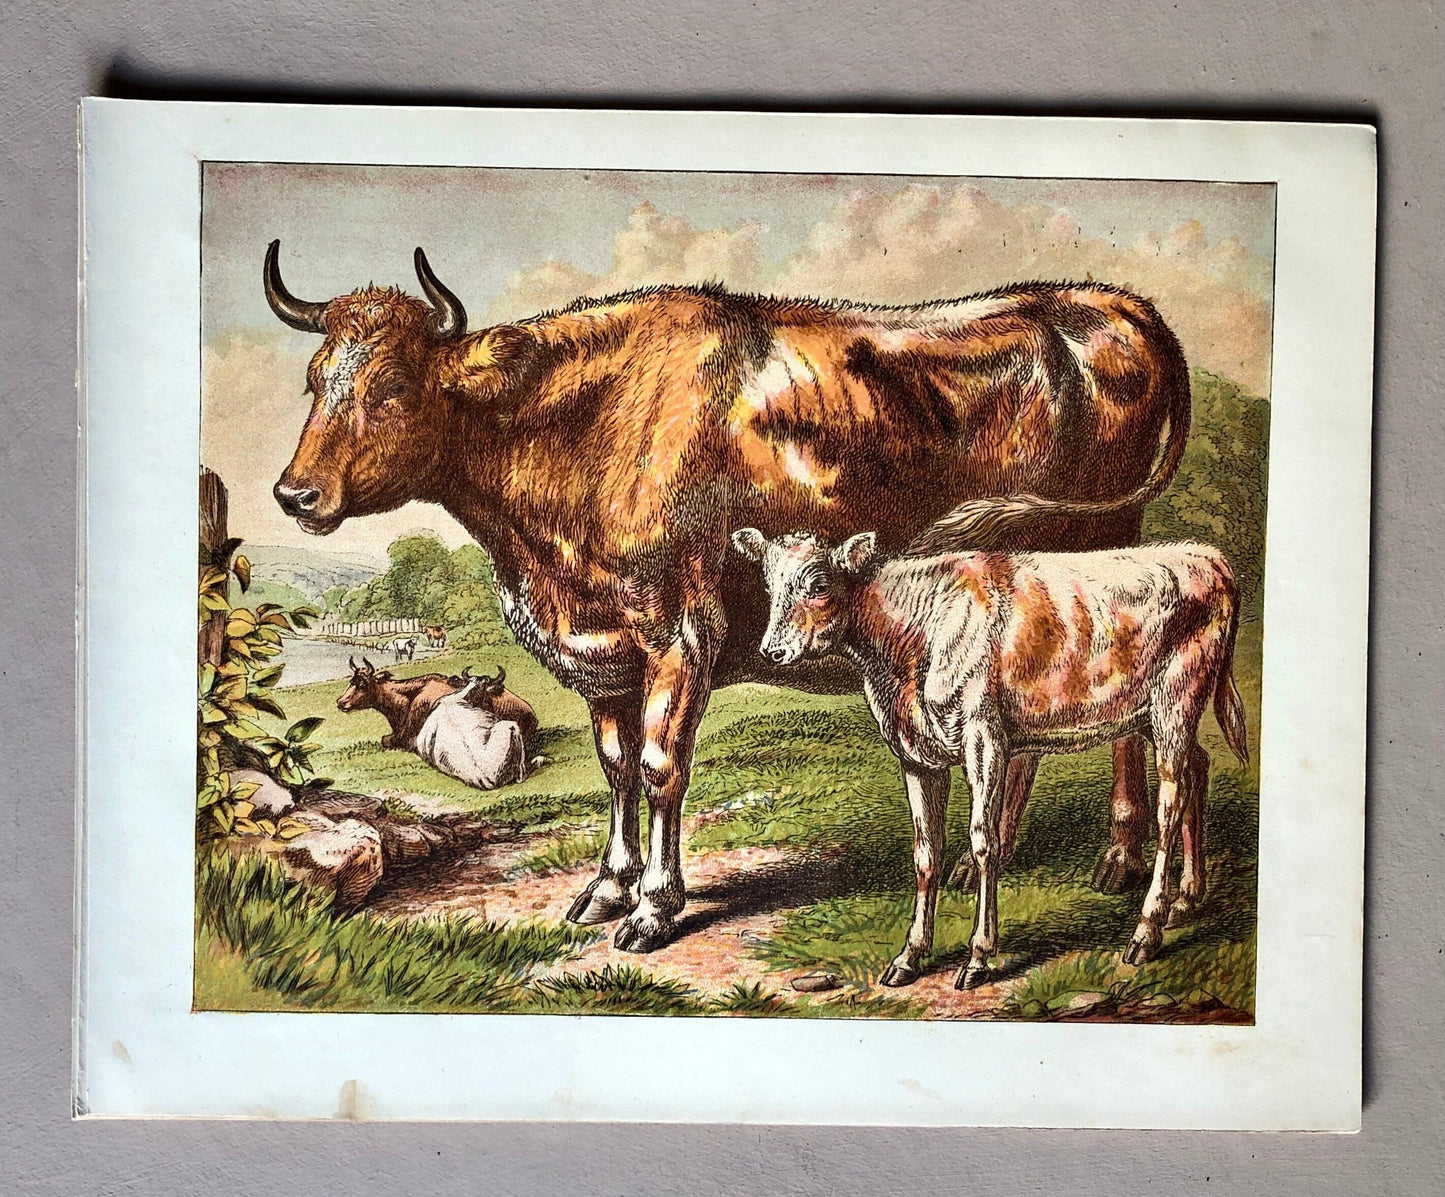 The Cow (La Vache). A Large chromolithograph print from Les Animaux Domestiques by Mme Pape-Carpantier. Dated 1872. Size: 24.5 x 21.5 cms.